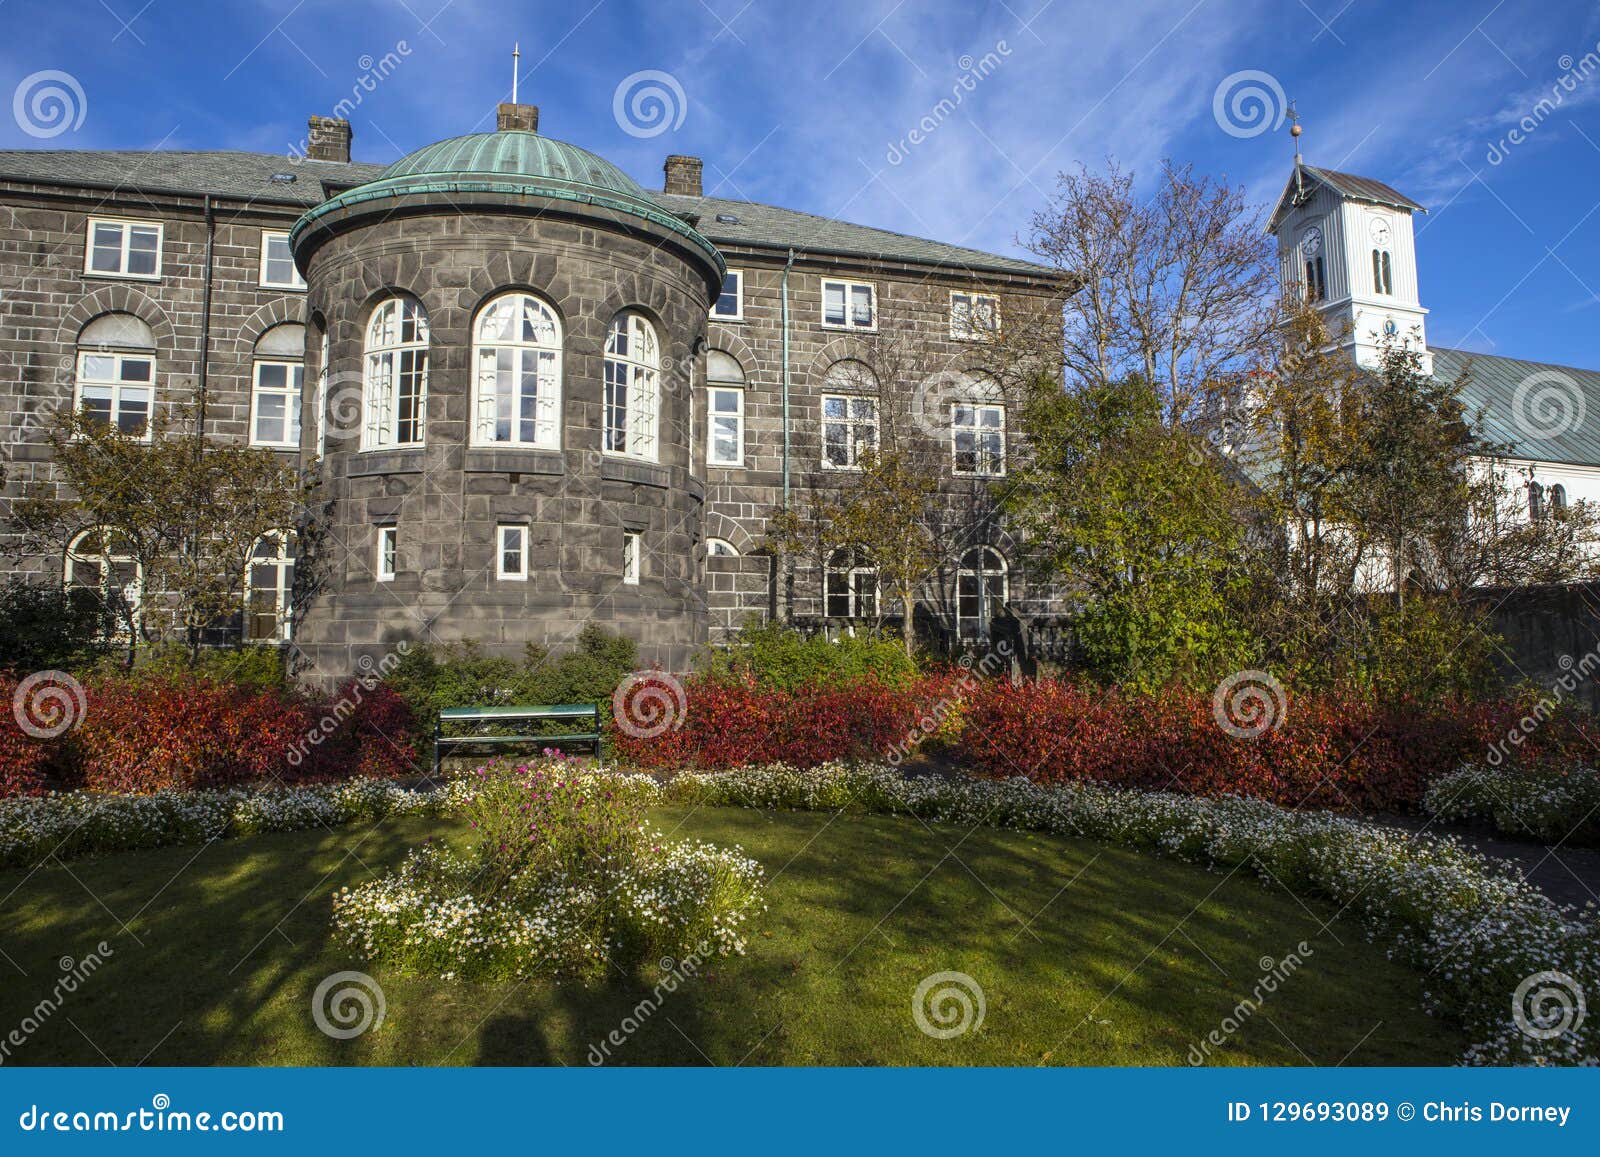 Parliament House Garden In Reykjavik Editorial Stock Image Image